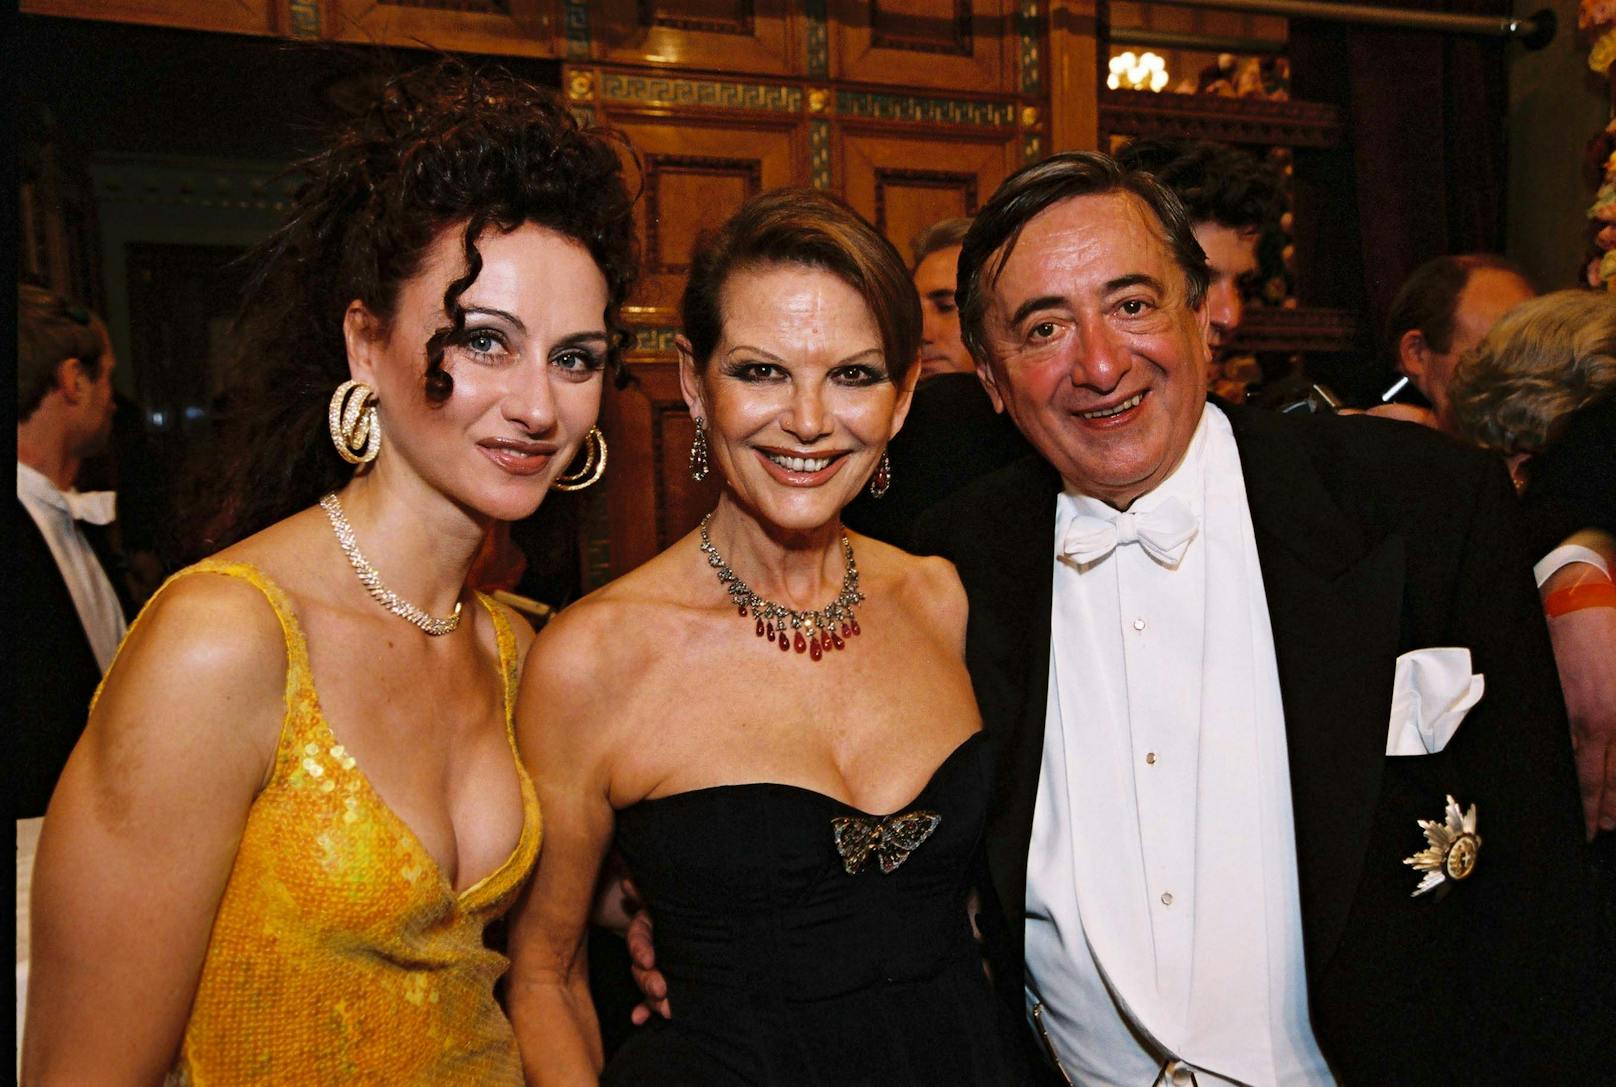 Richard Lugners Stargast im Jahr 2002 war Claudia Cardinale.